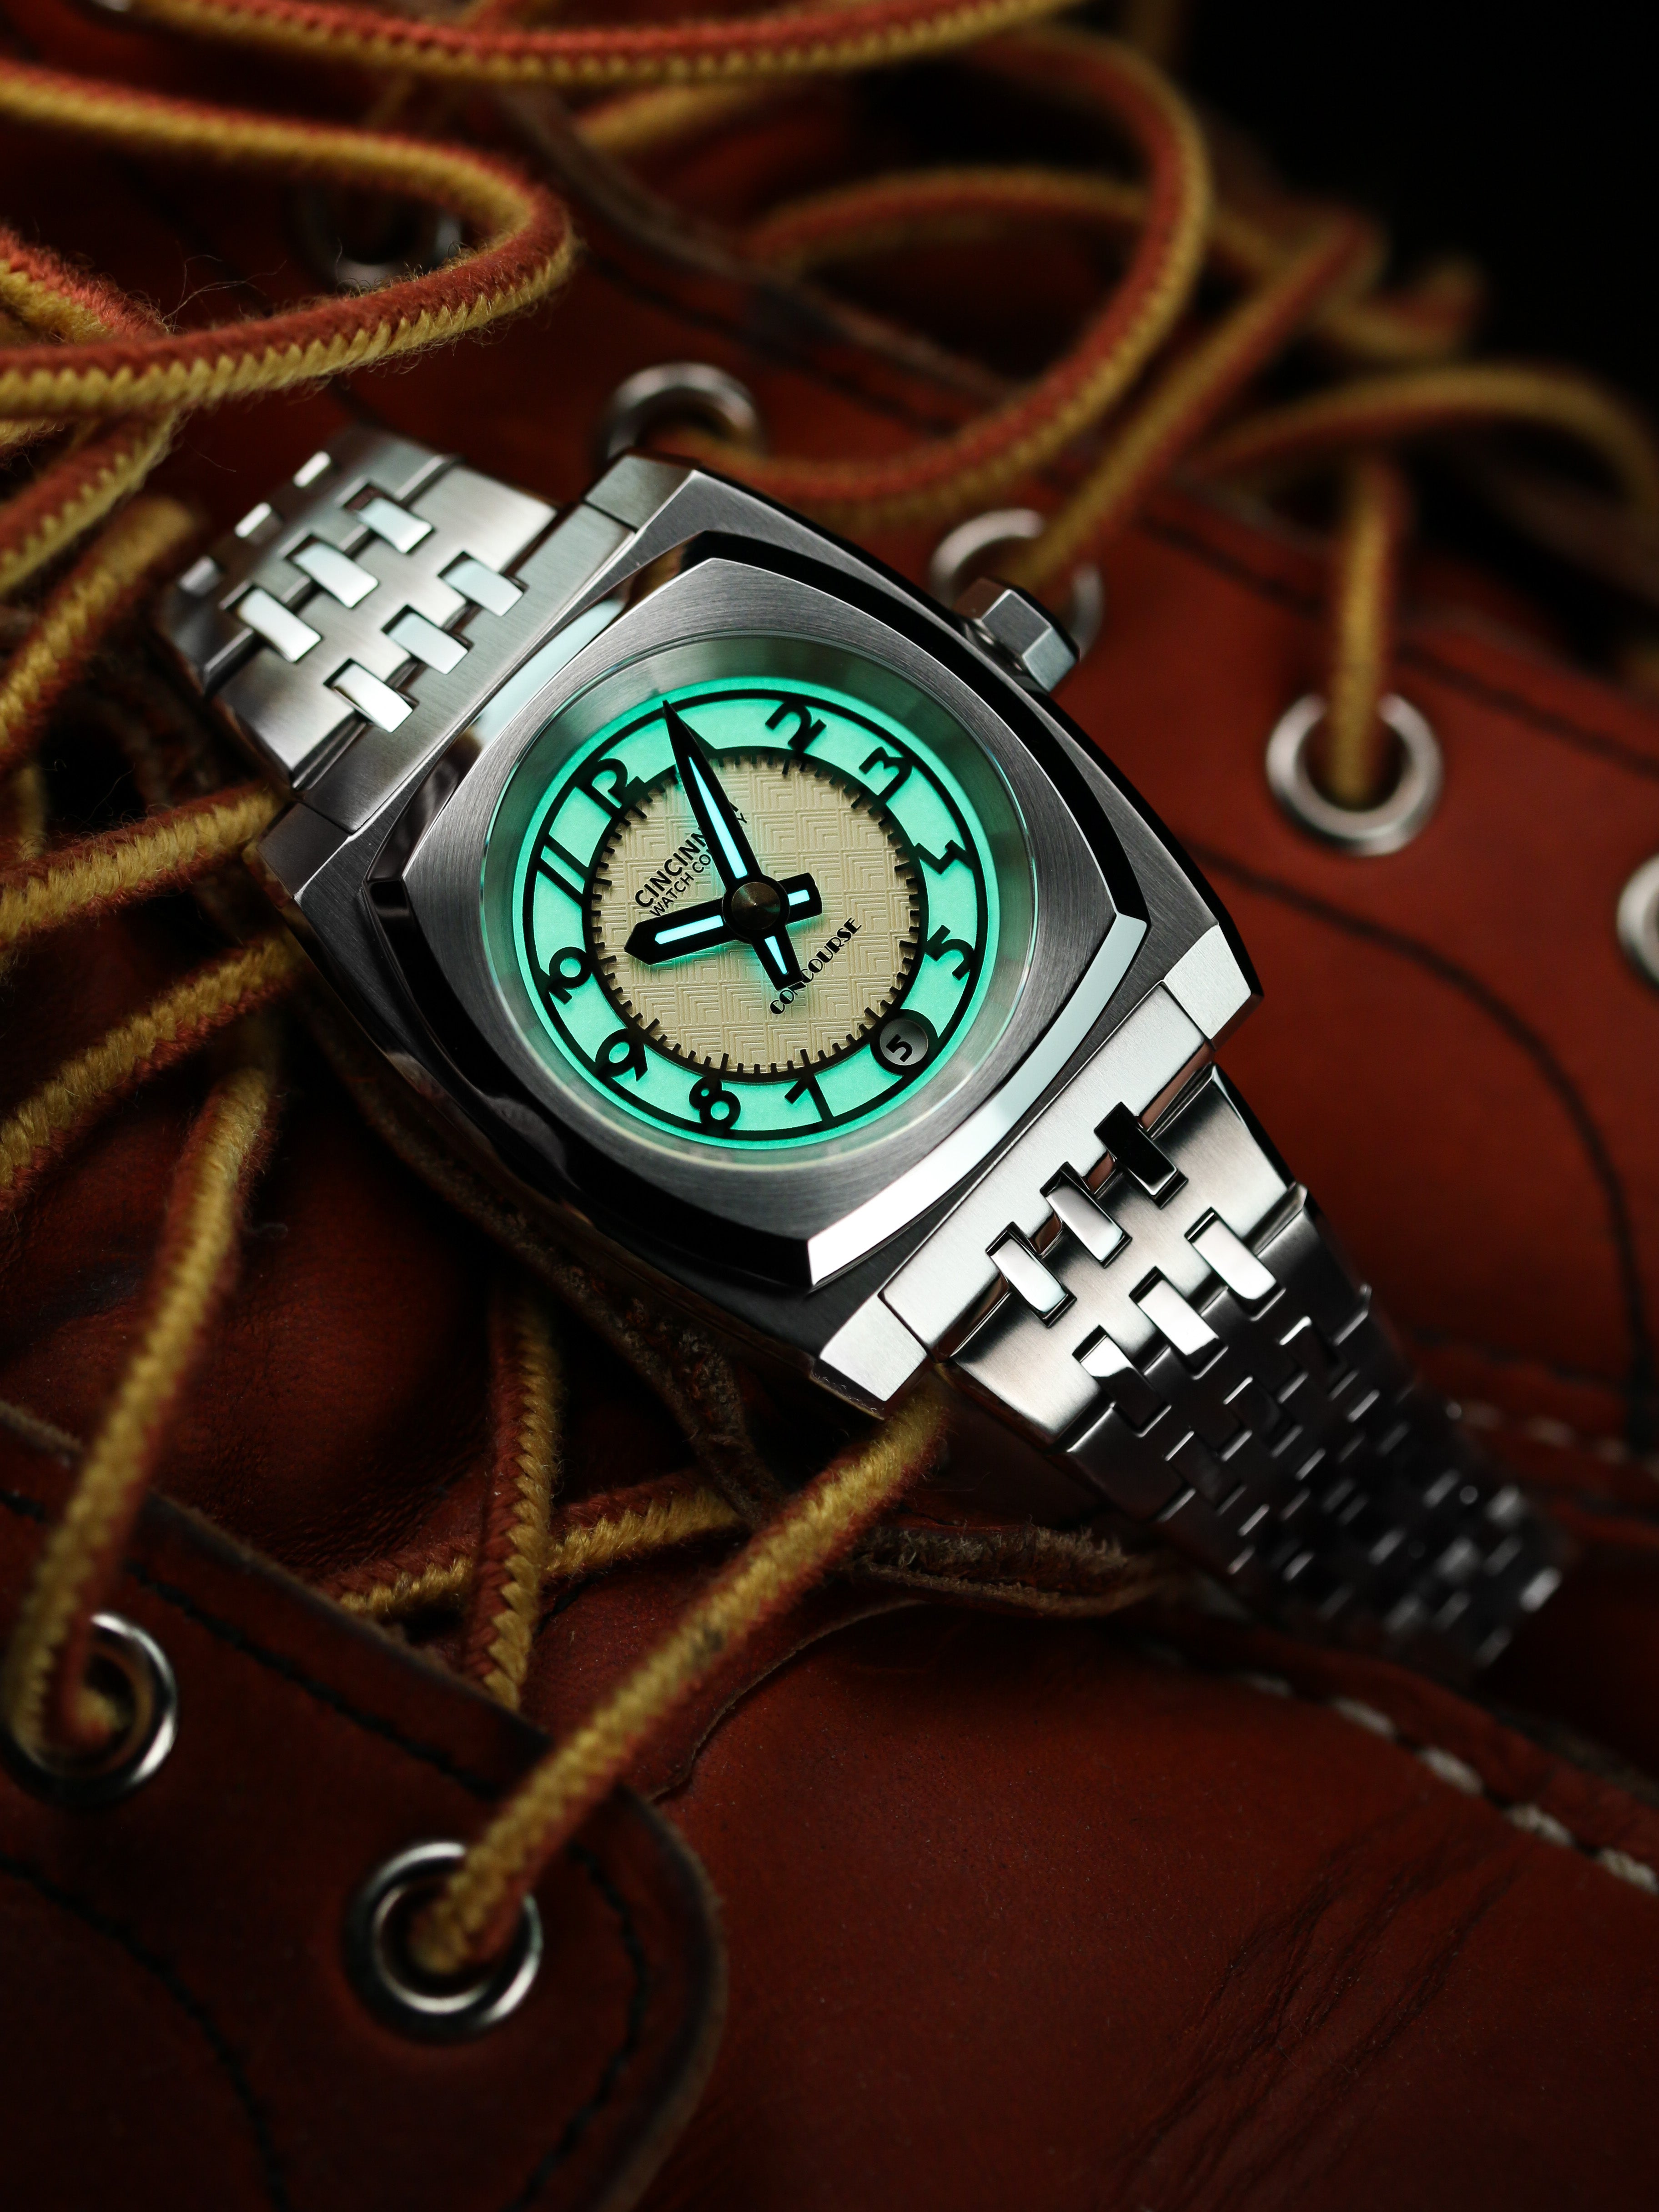 Buy Online Watches: Luxury Watch, Digital watch, Smartwatch | Shoppersstop